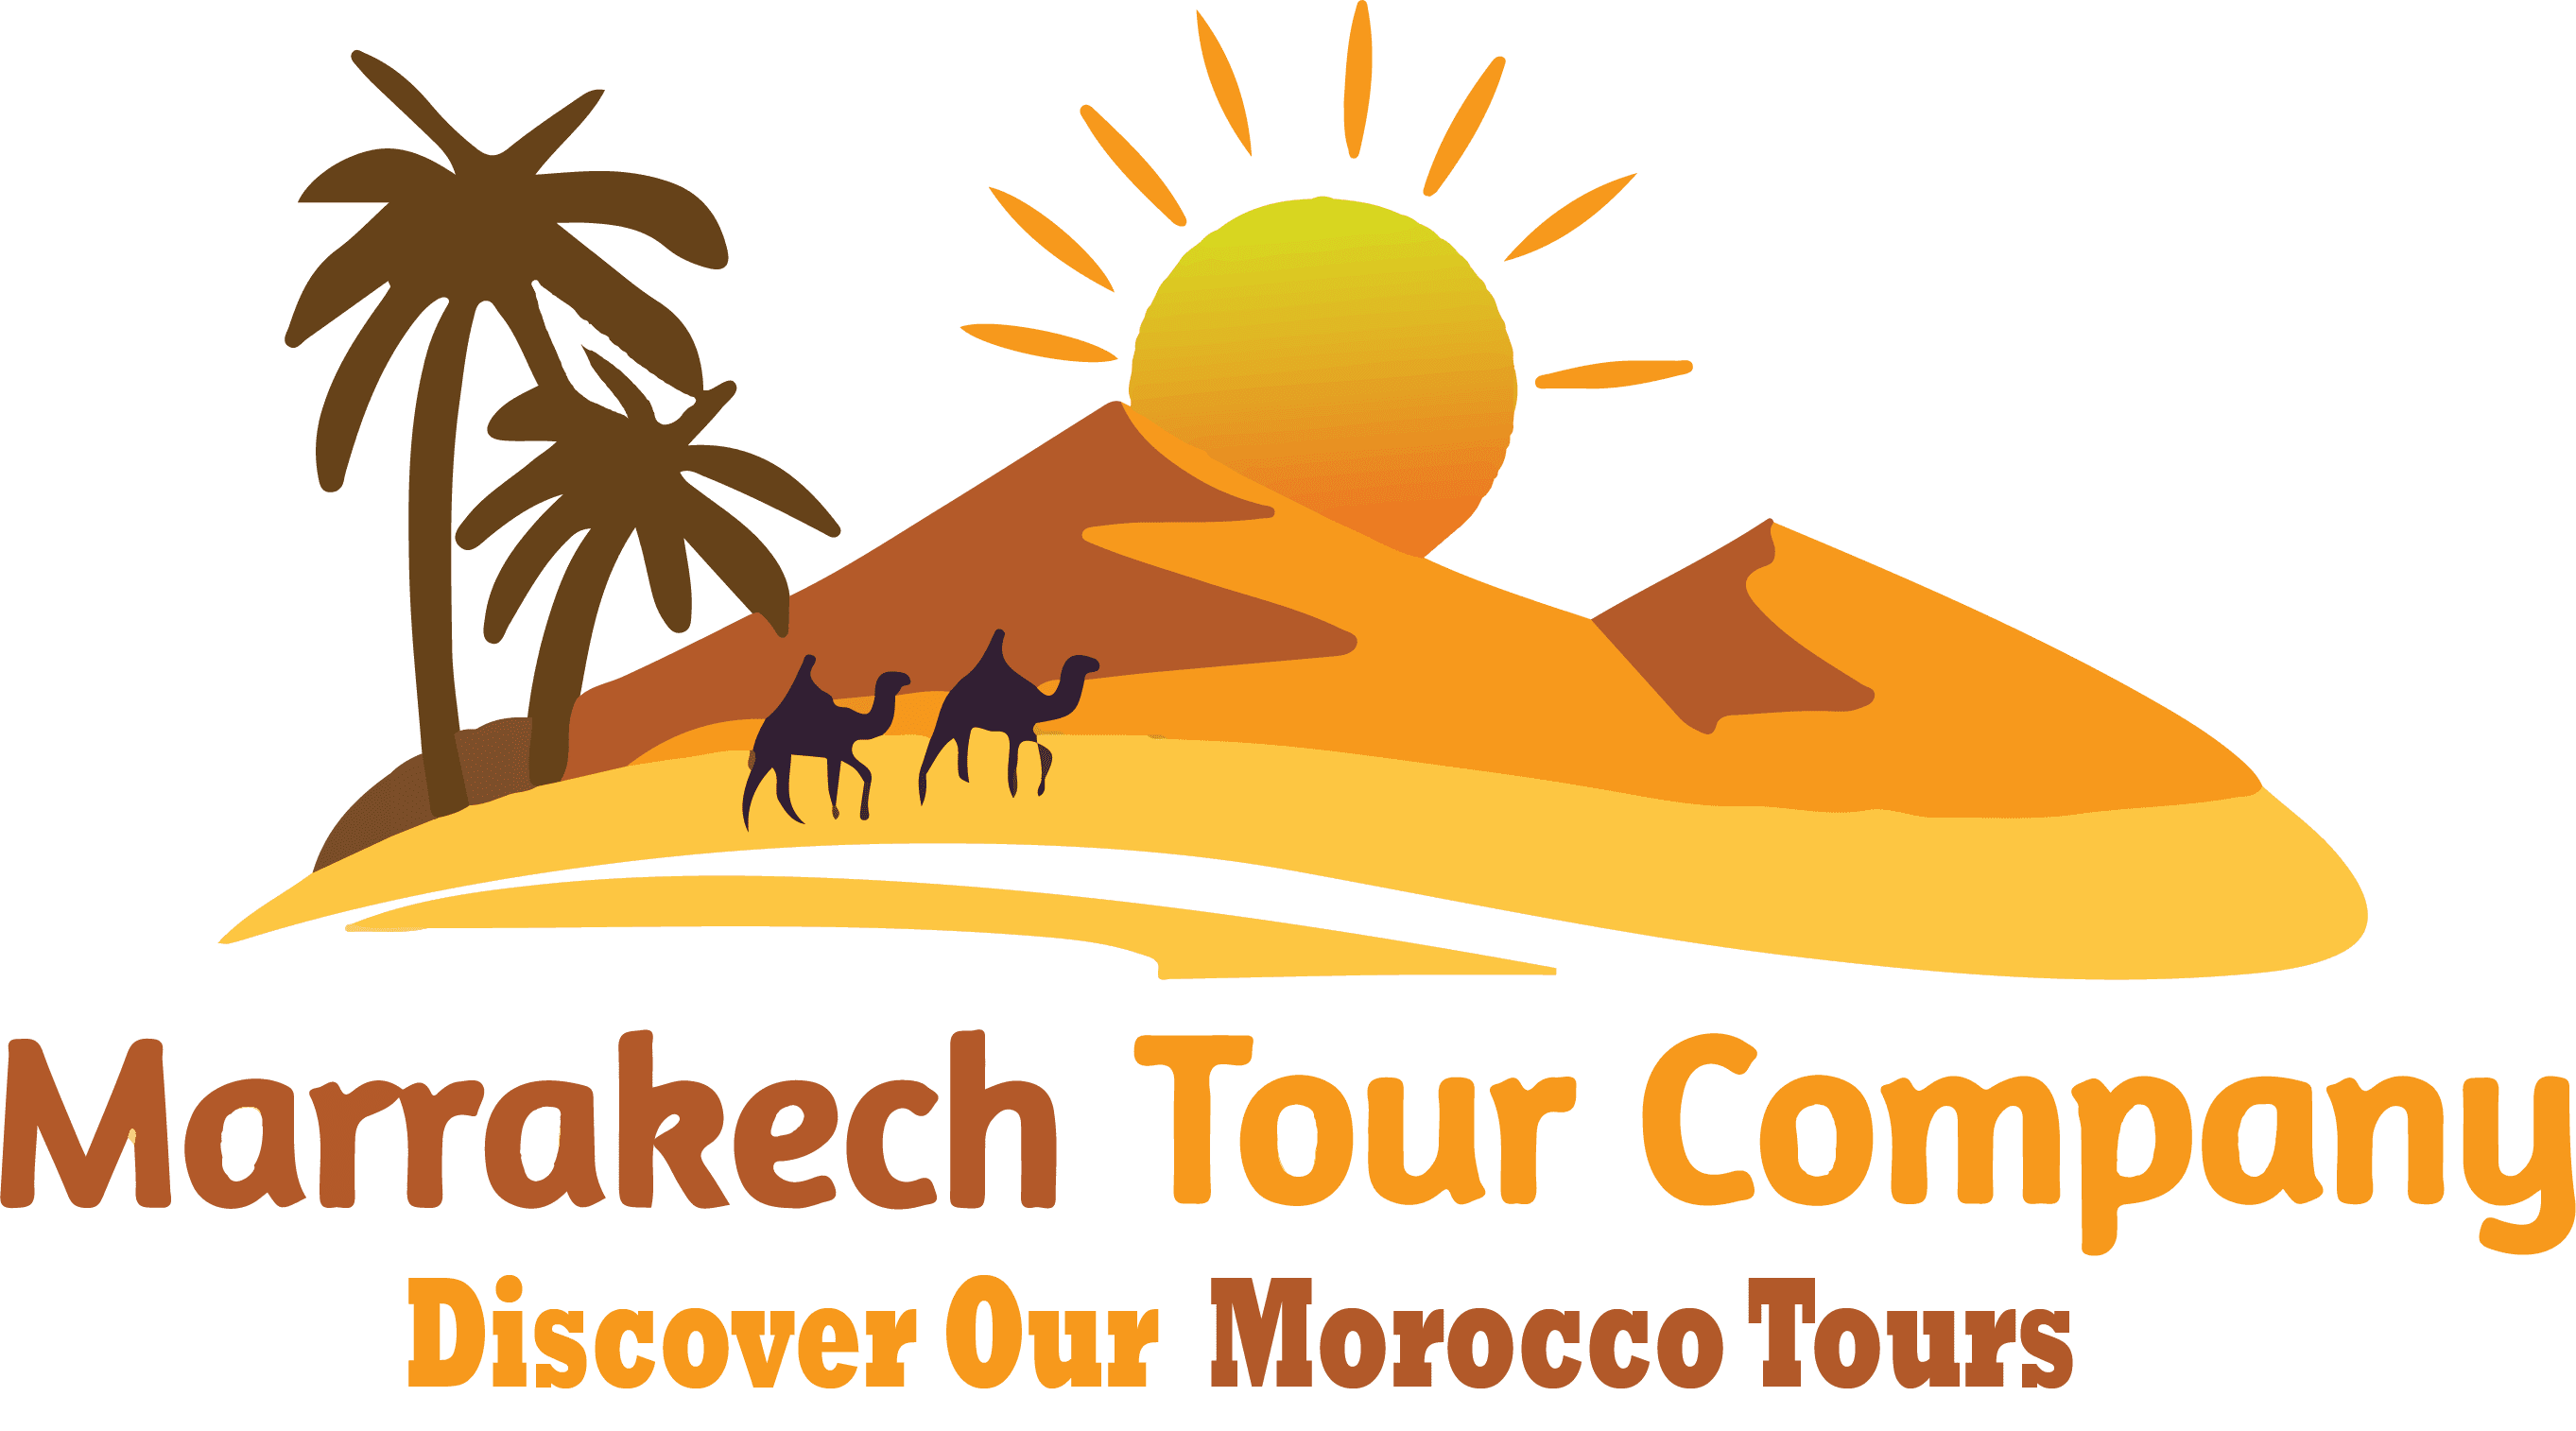 Marrakech Tour Company